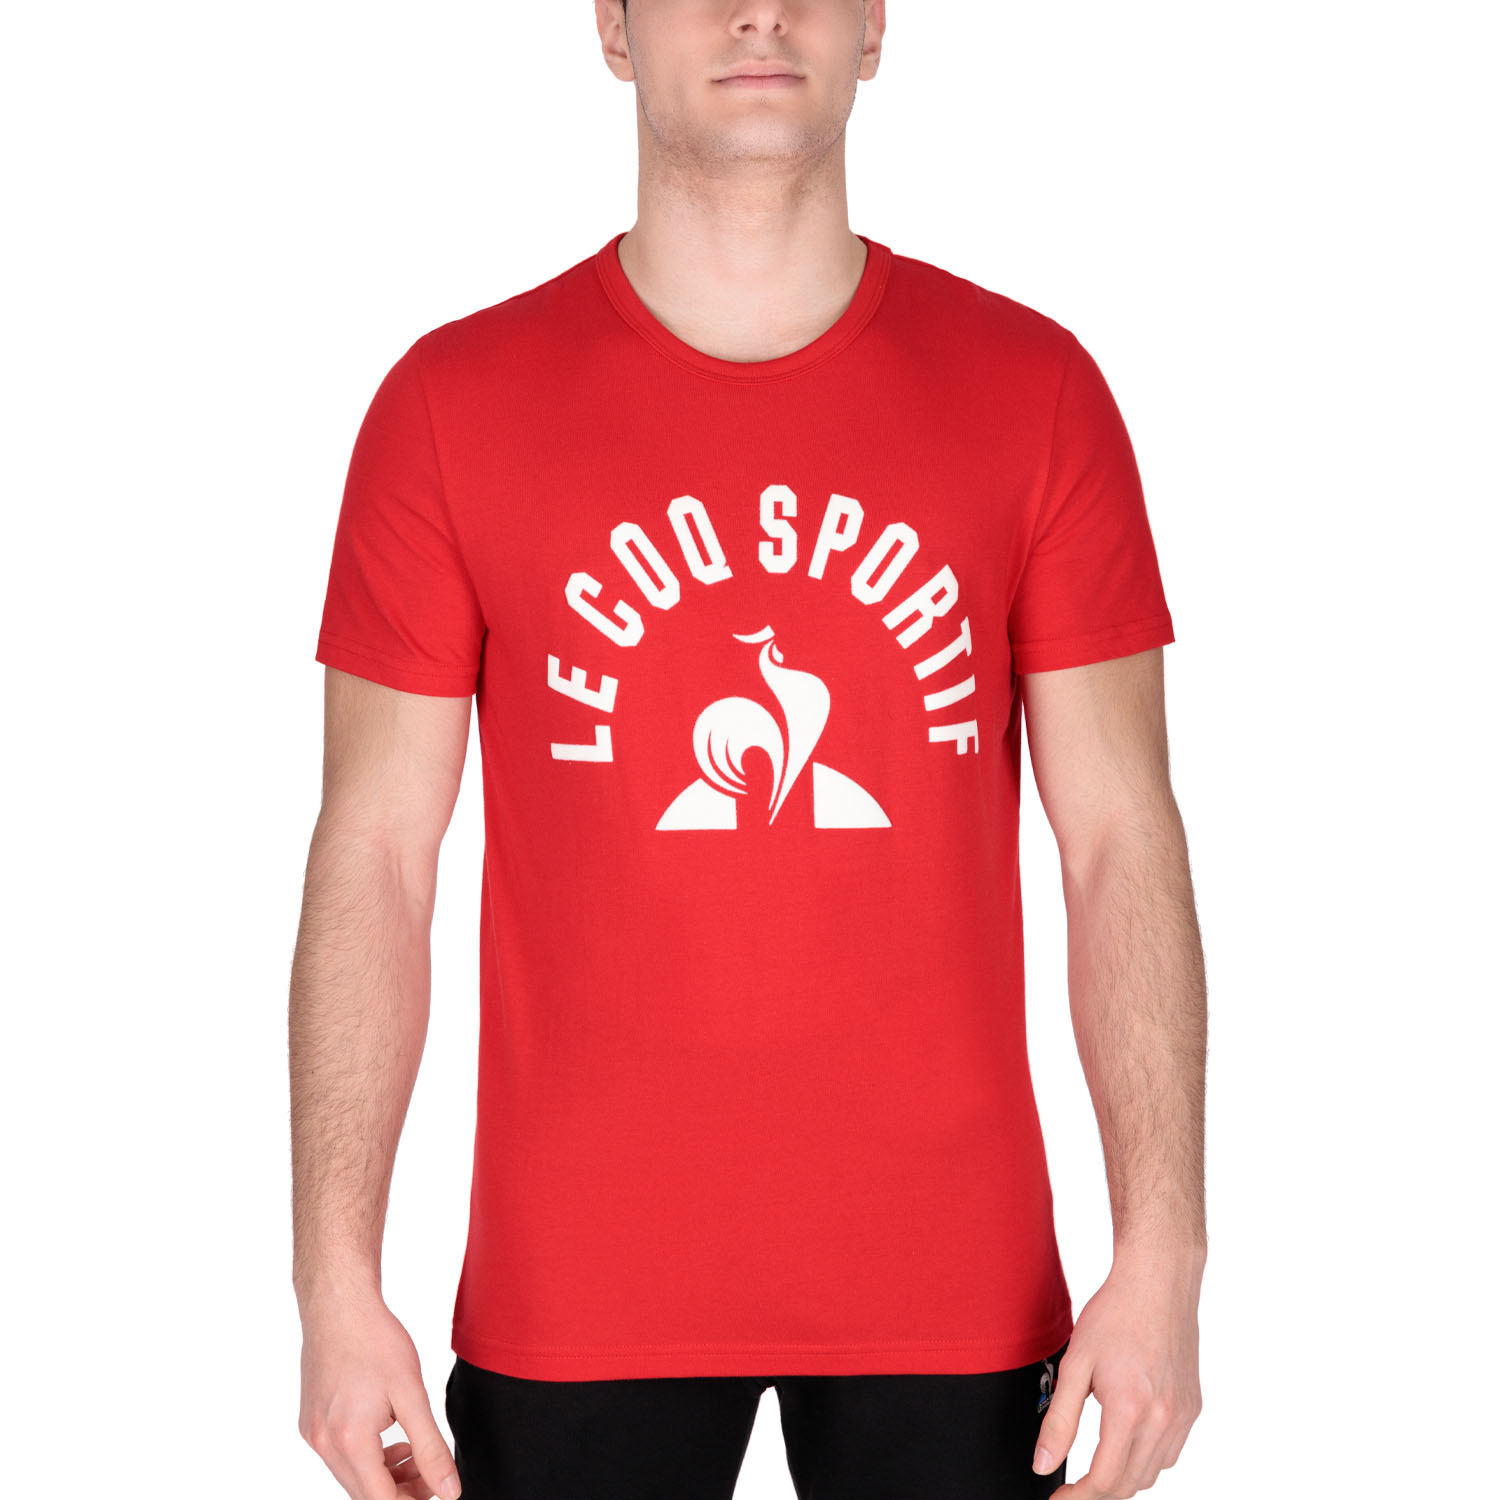 Le Coq Sportif Graphic Camiseta - Rouge Electro/New Optical White